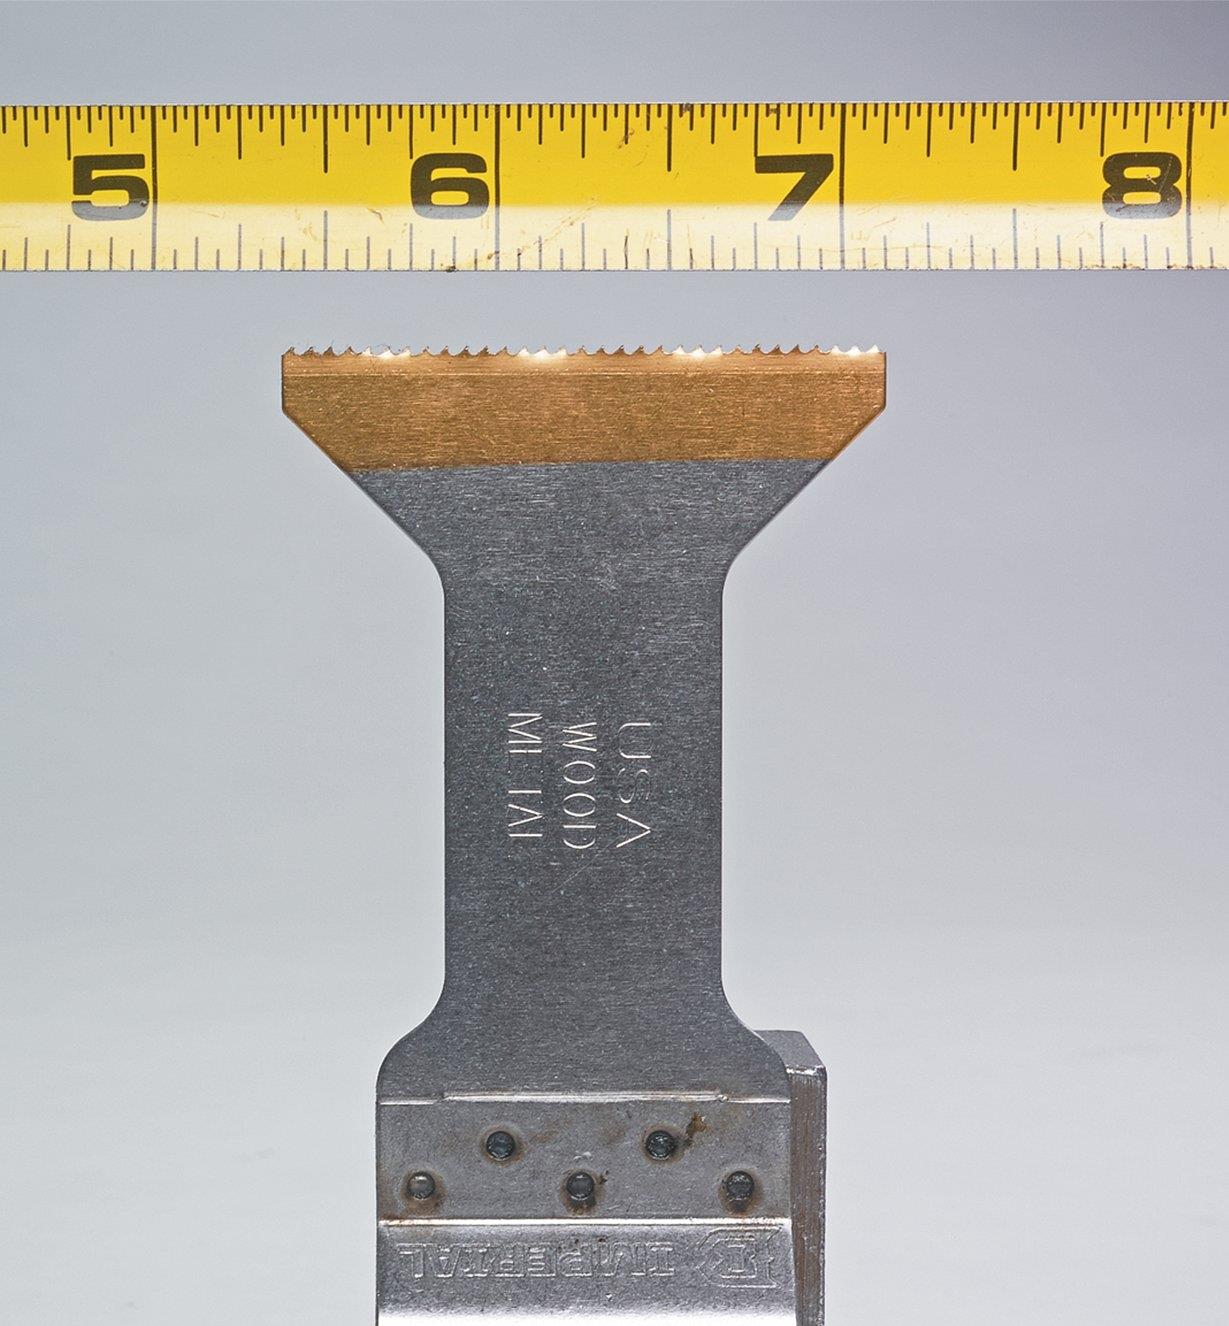 77J5924 - 1 3/4" x 2 1/8" 18 tpi Titanium Nitride Coated Bimetal Blade, each